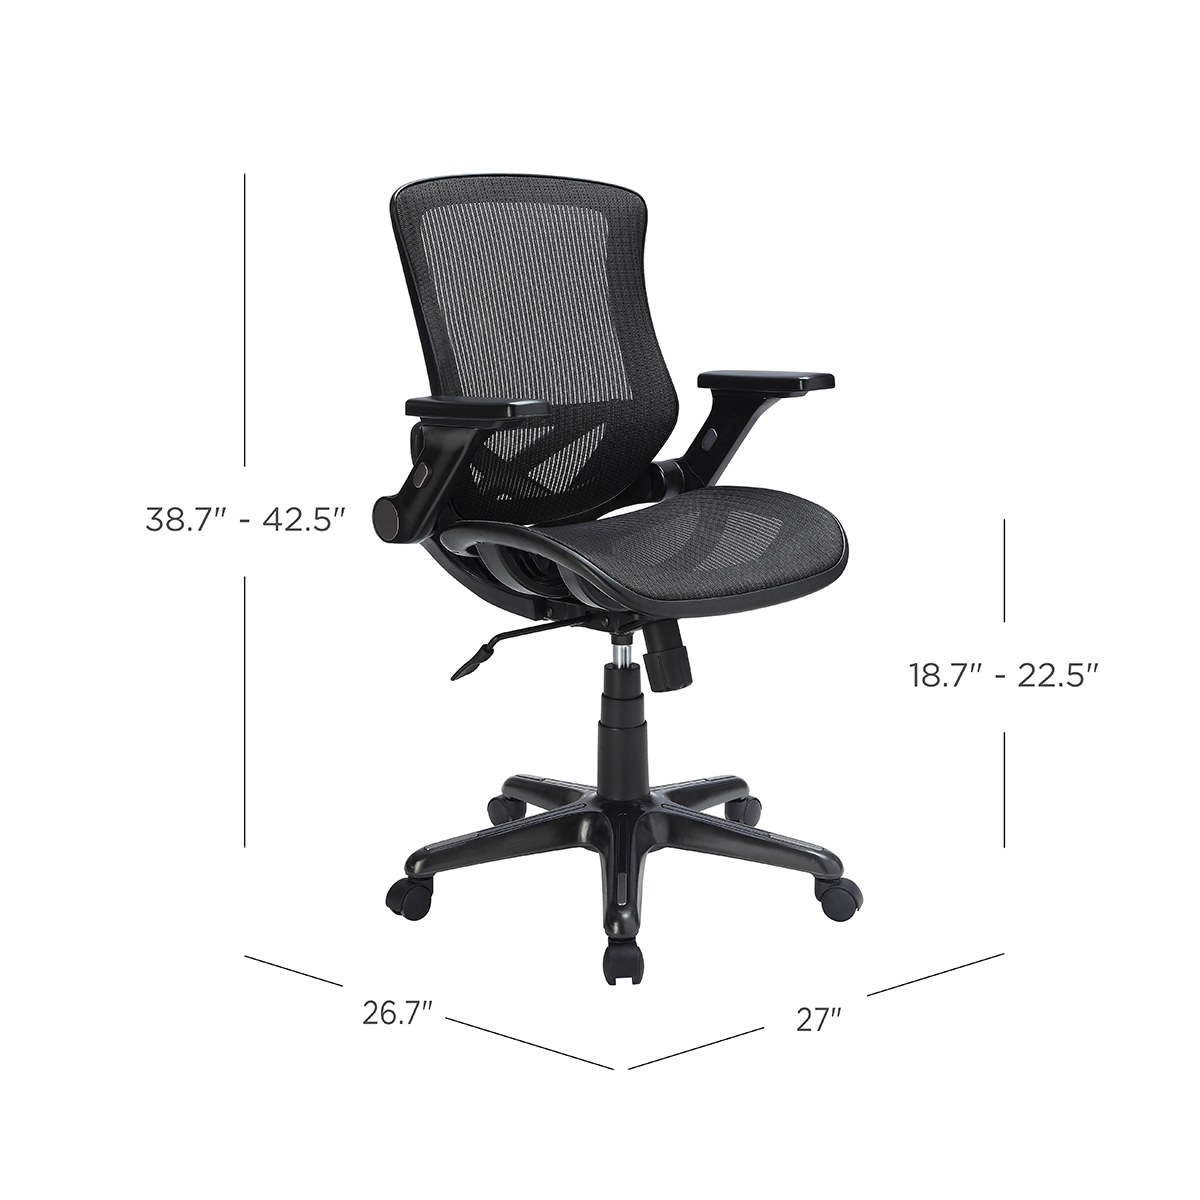 Bayside Furnishings Metrex IV Mesh Office Chair 